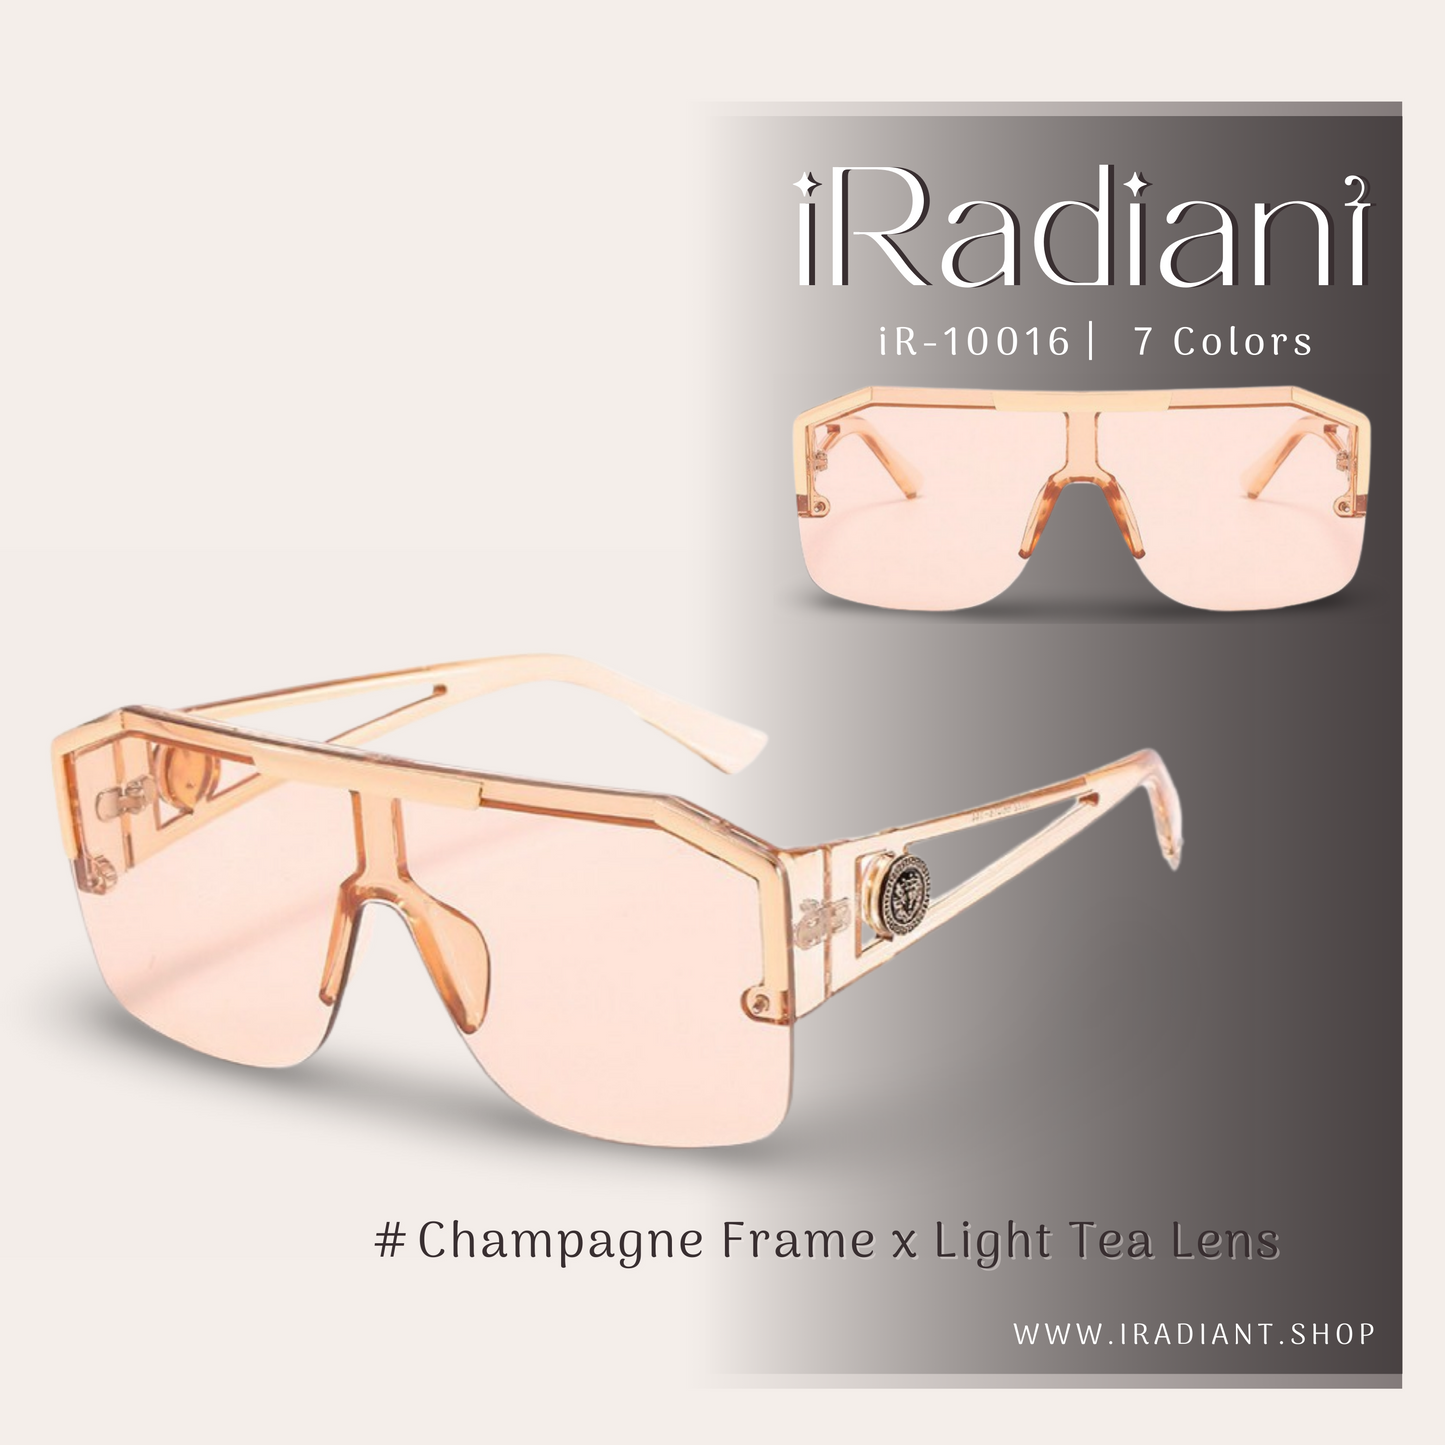 iR-10016-F ︳iRadiant Lion Head Hollow Frame Design One-Piece Shades  ︳For Women's ︳Champagne Frame x Light Tea Lens